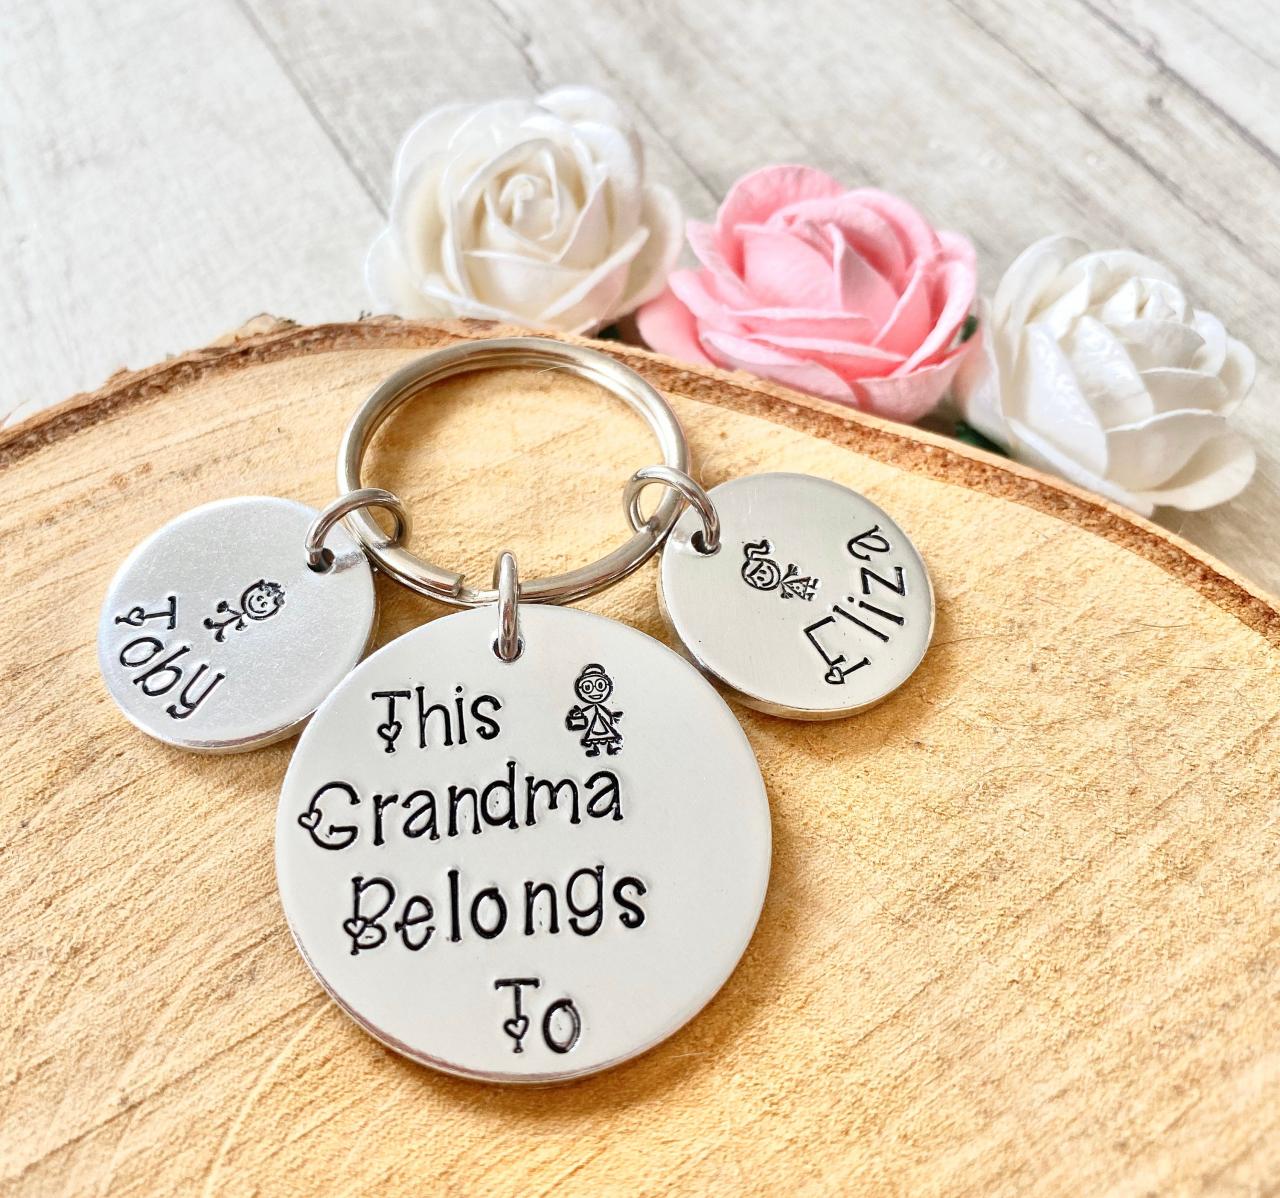 Grandma Gift, Gift For Grandma, Grandma Gift, Baby Gift, Grandparent Gift, Mother's Day Gift, Nana Gift, Nanny Gift, From Kids